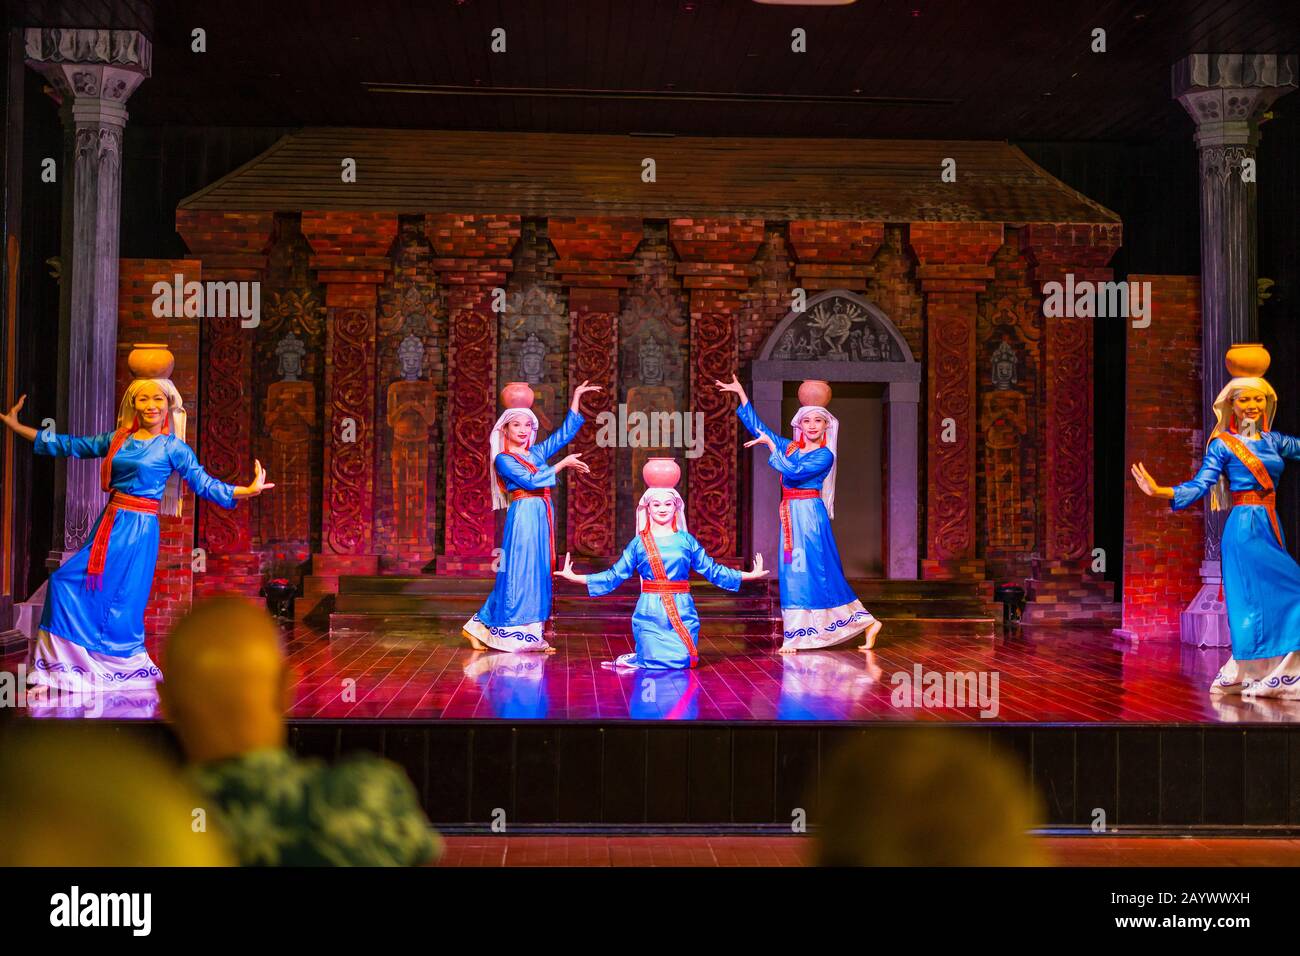 Phan Rang town, Ninh Thuan province, Vietnam - 14 January, 2020: The Cham girls perform an Apsara traditional dance at ancient Po Klong Garai temple, Stock Photo